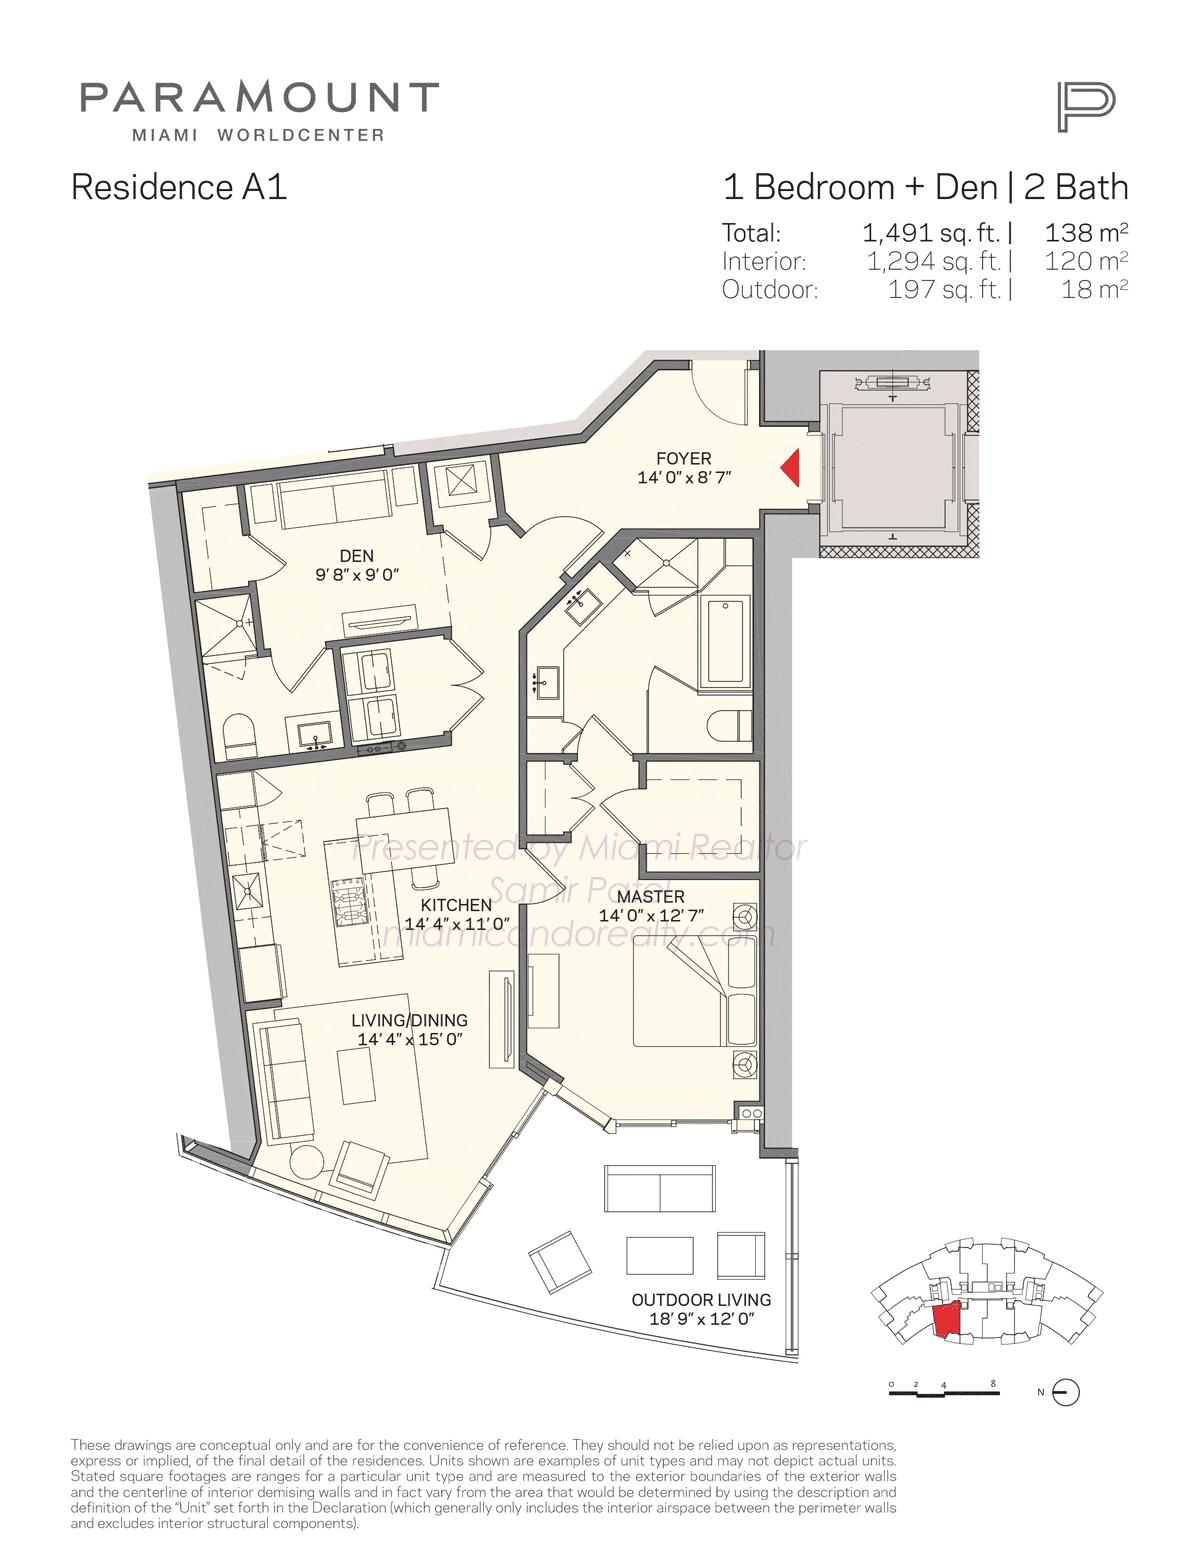 Paramount Miami Worldcenter Residence Model A1 Floorplan